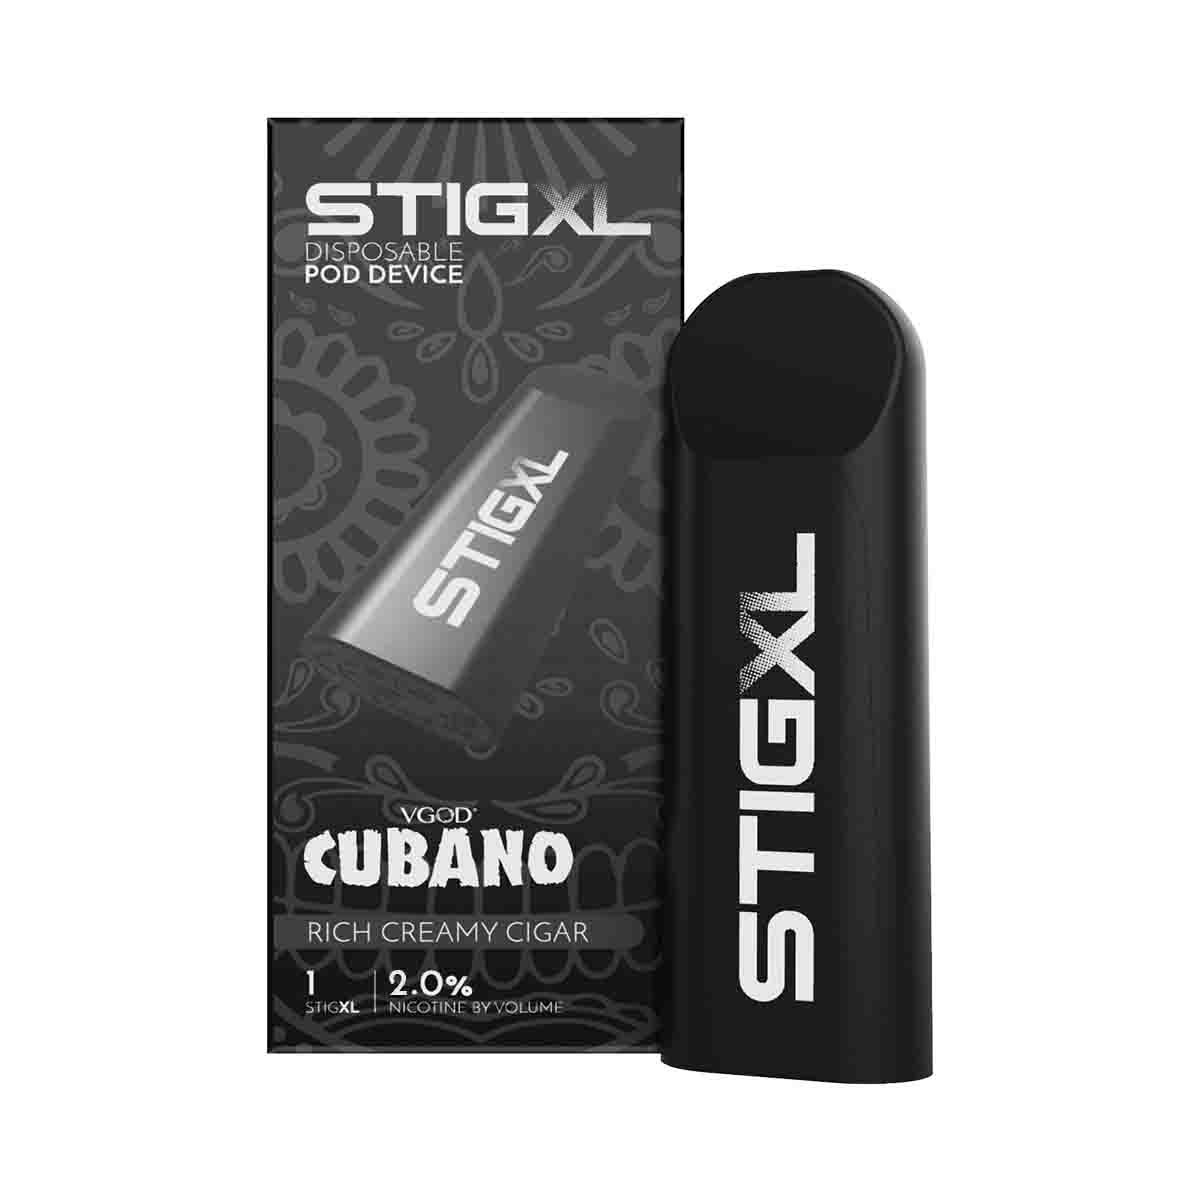 Stig XL Cubano Disposable Vape